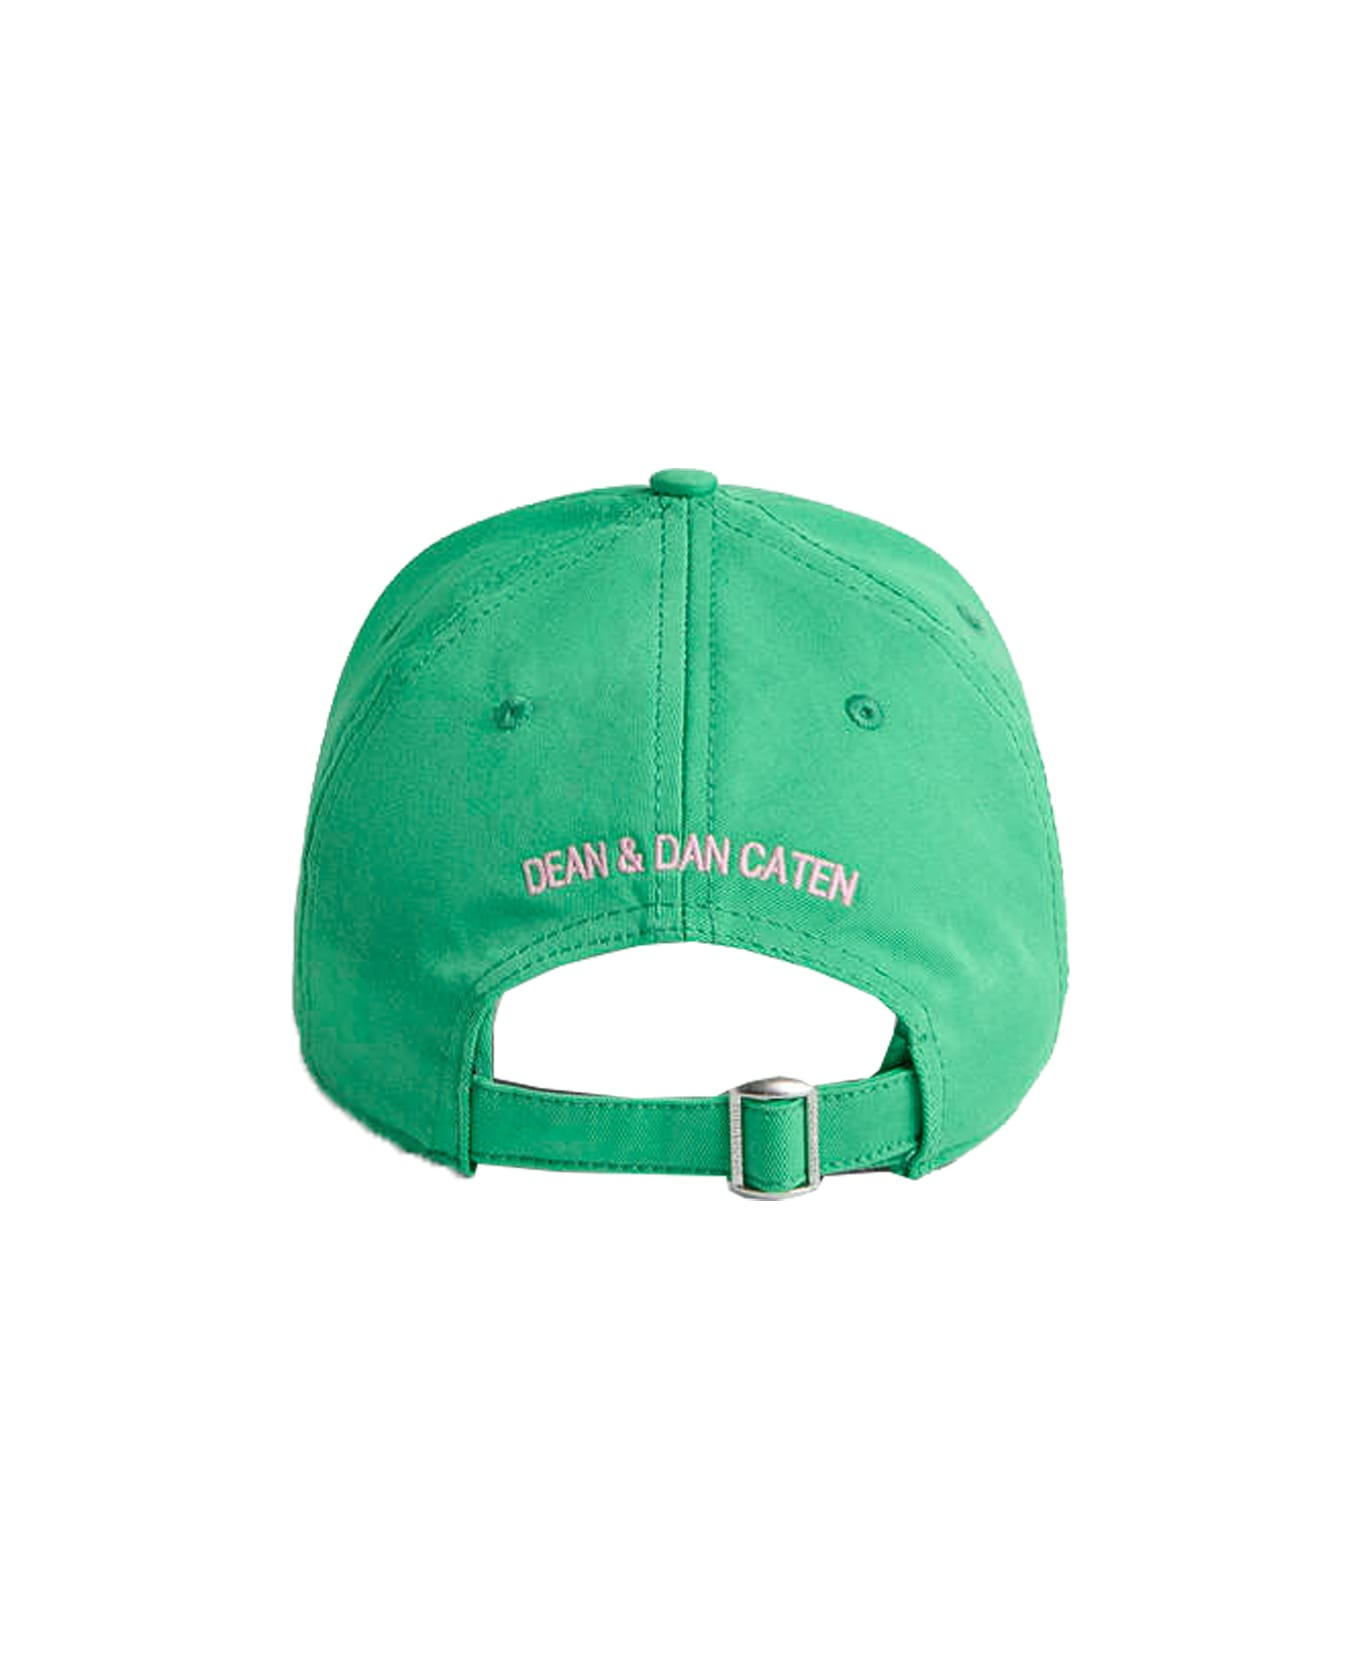 Dsquared2 Baseball Hat - Green